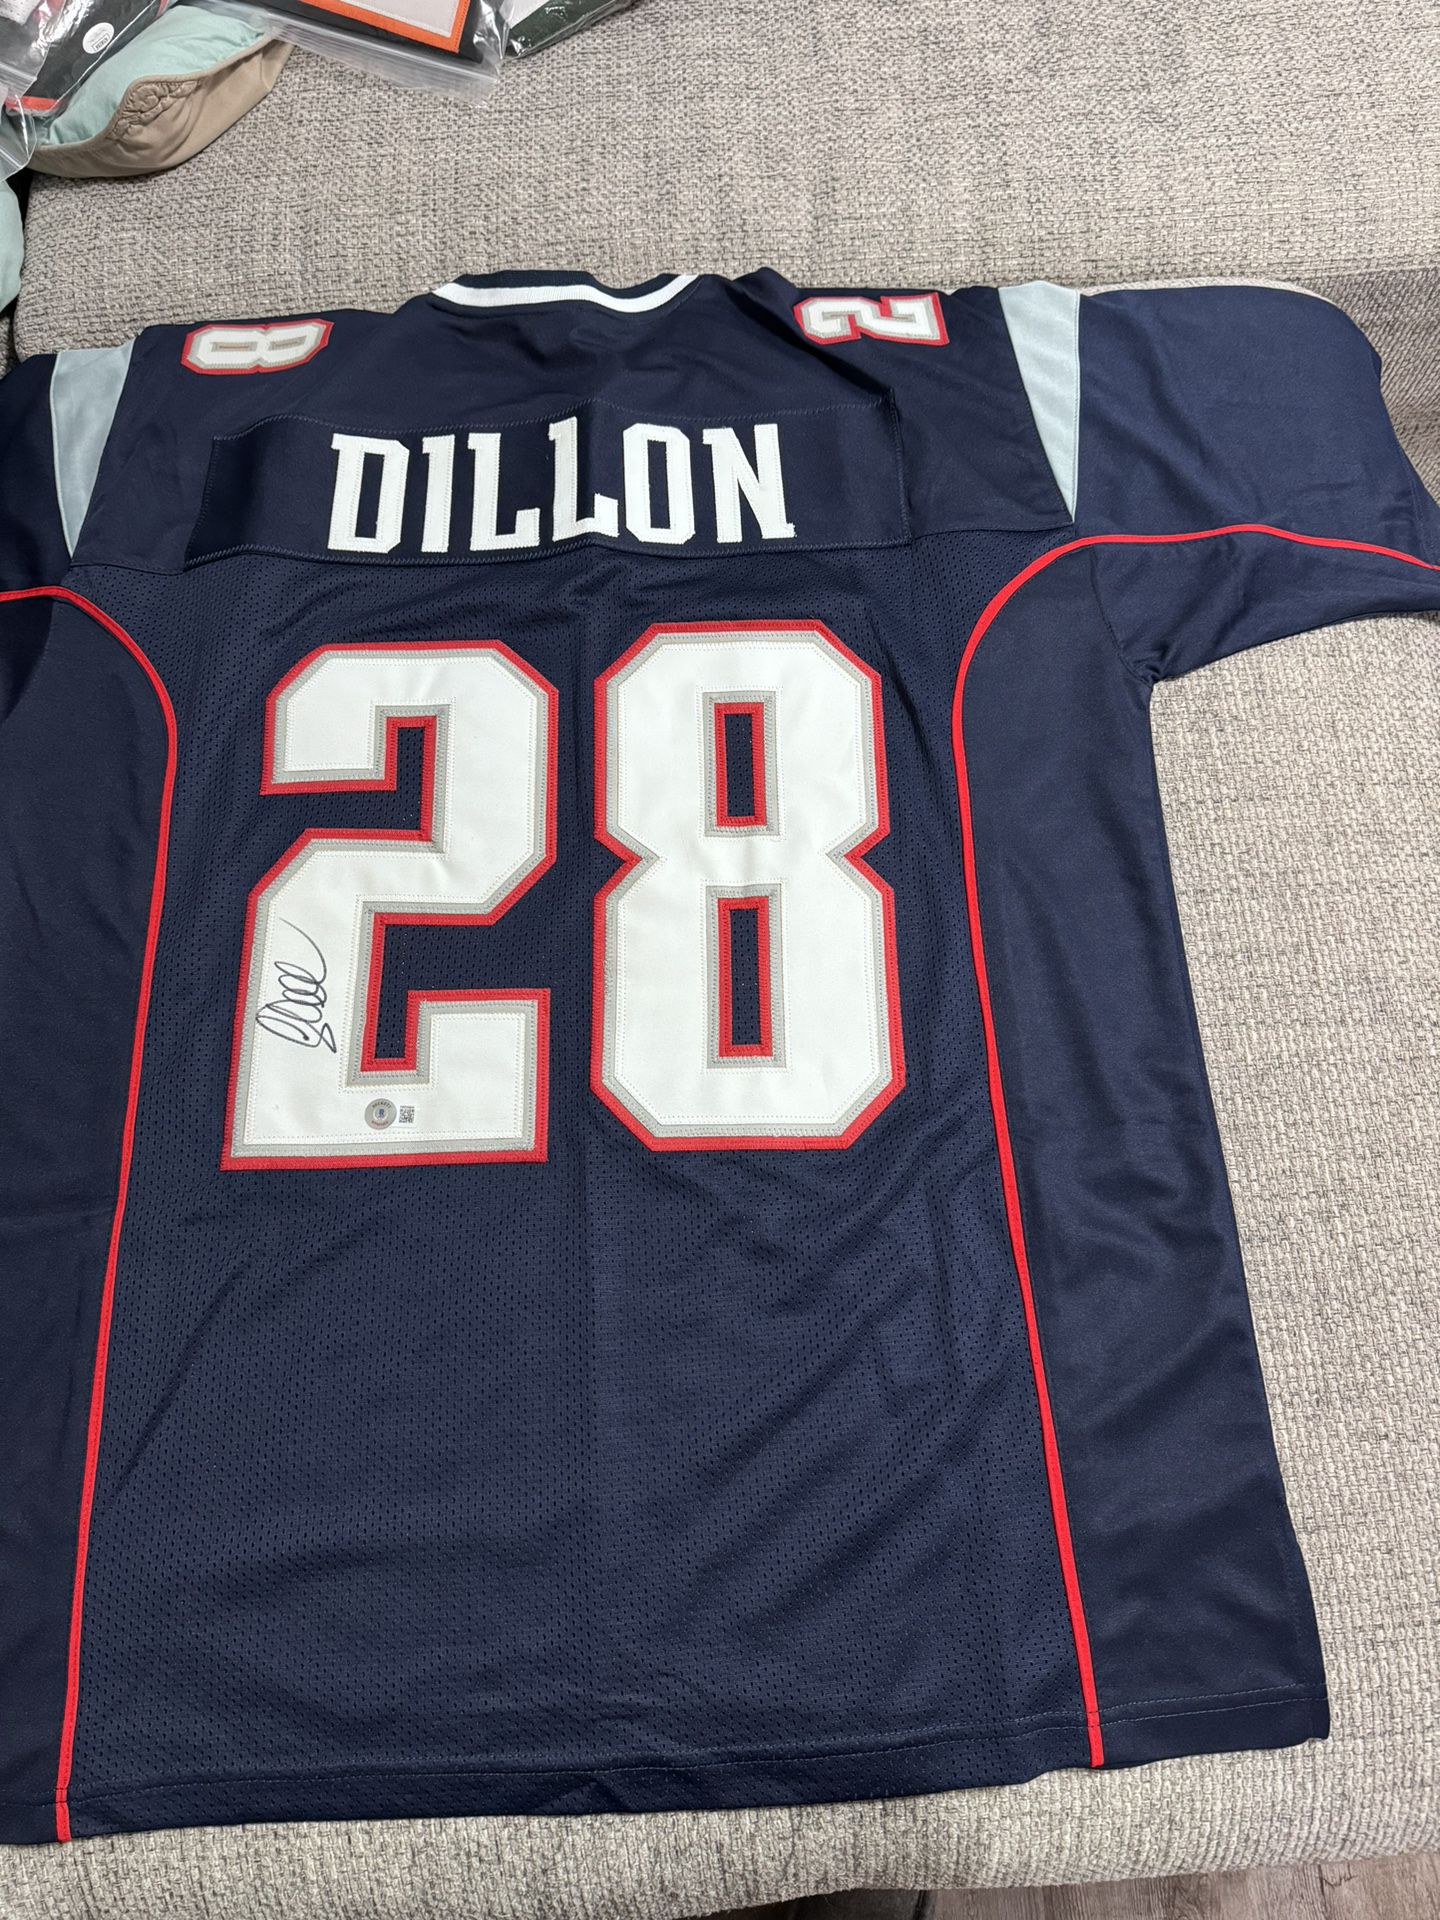 Corey Dillon Signed Autograph Custom Jersey - New England Patriots 